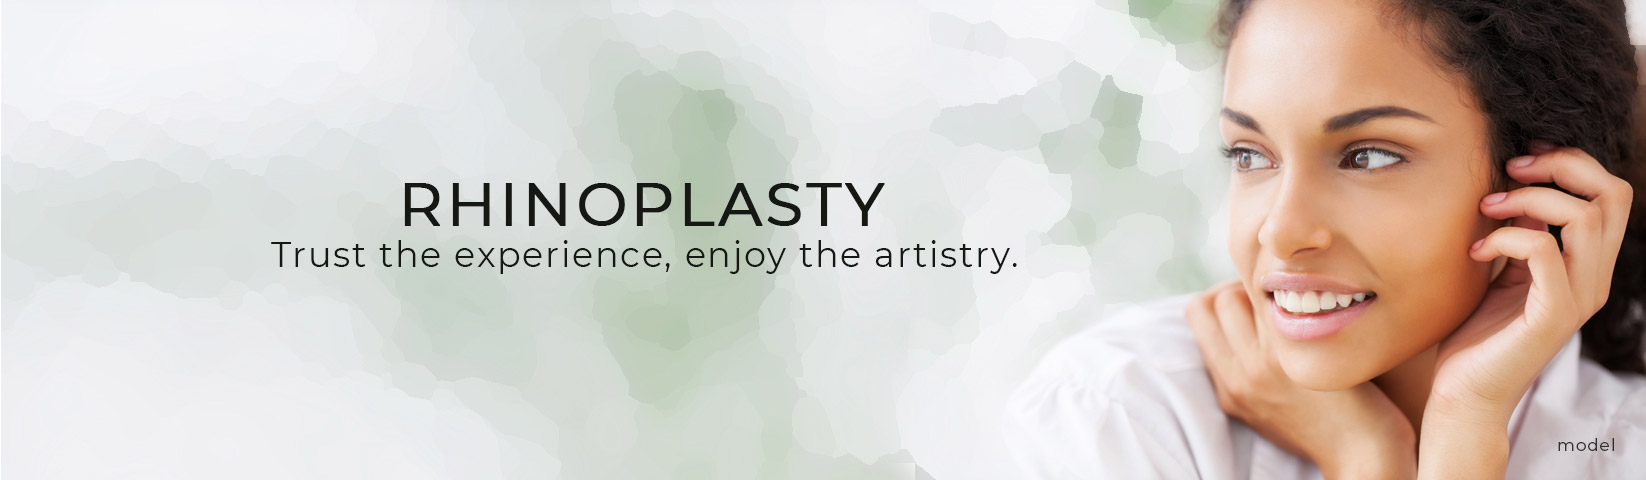 Rhinoplasty: Trust the experience, enjoy the artistry